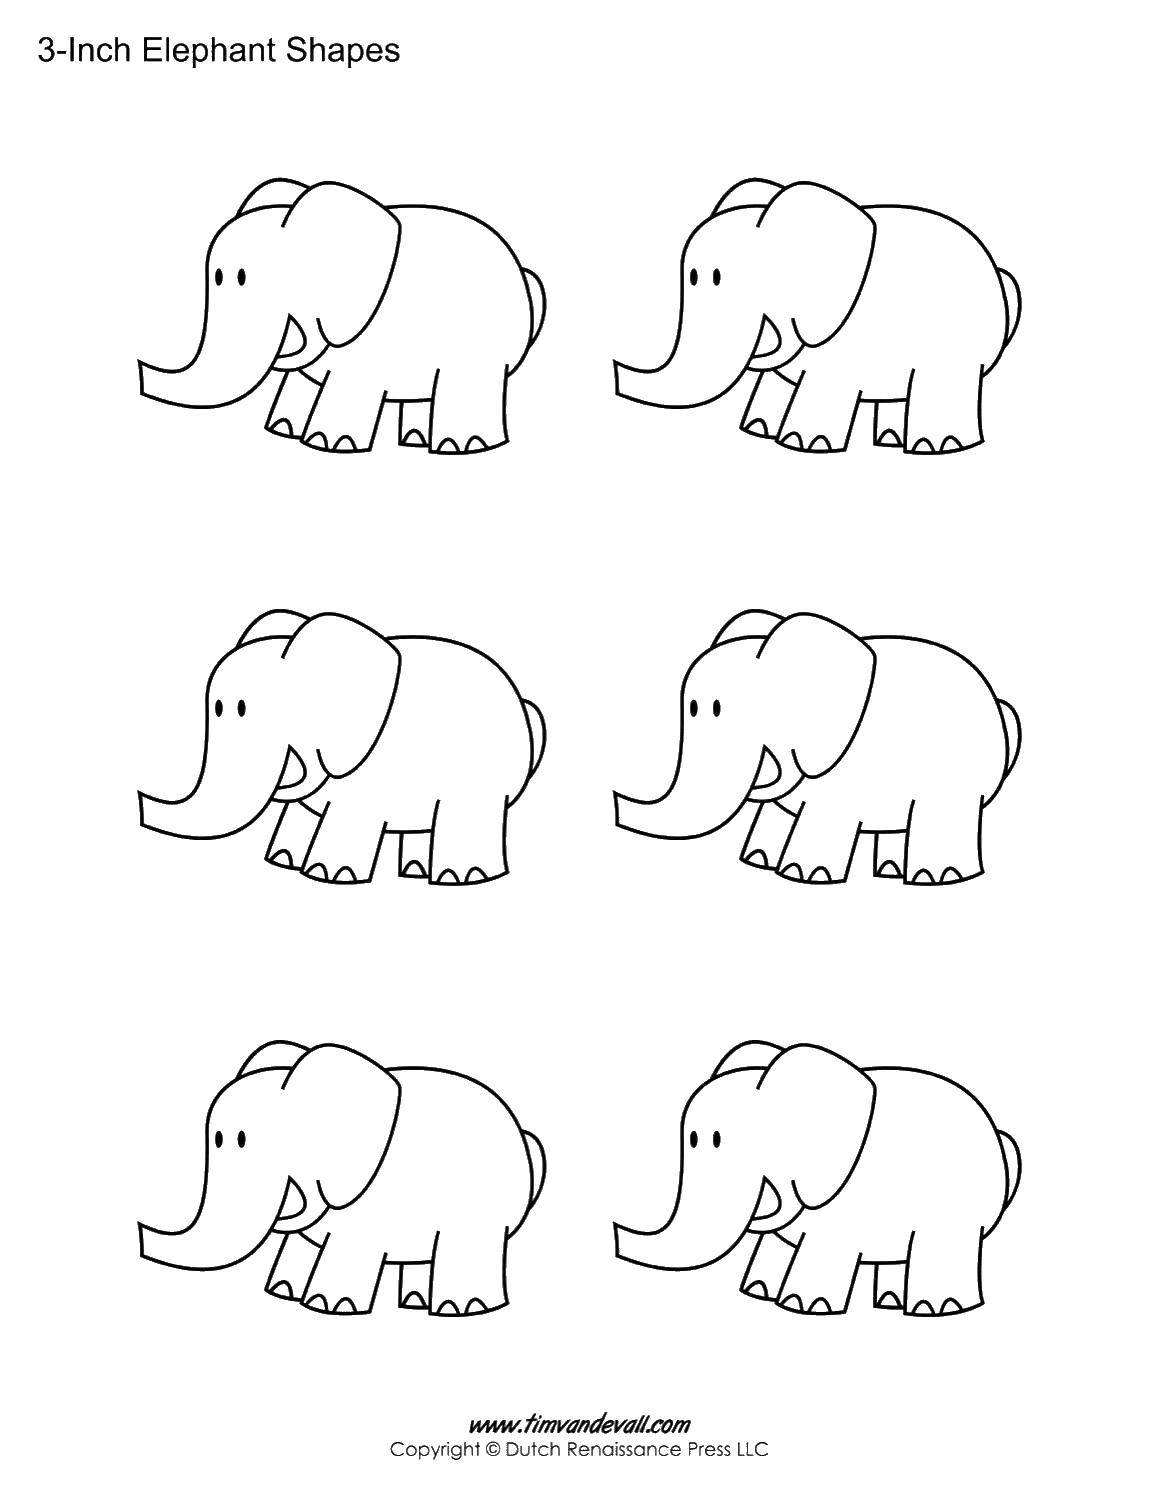 Coloring Elephants. Category Animals. Tags:  animals, elephants, elephant.